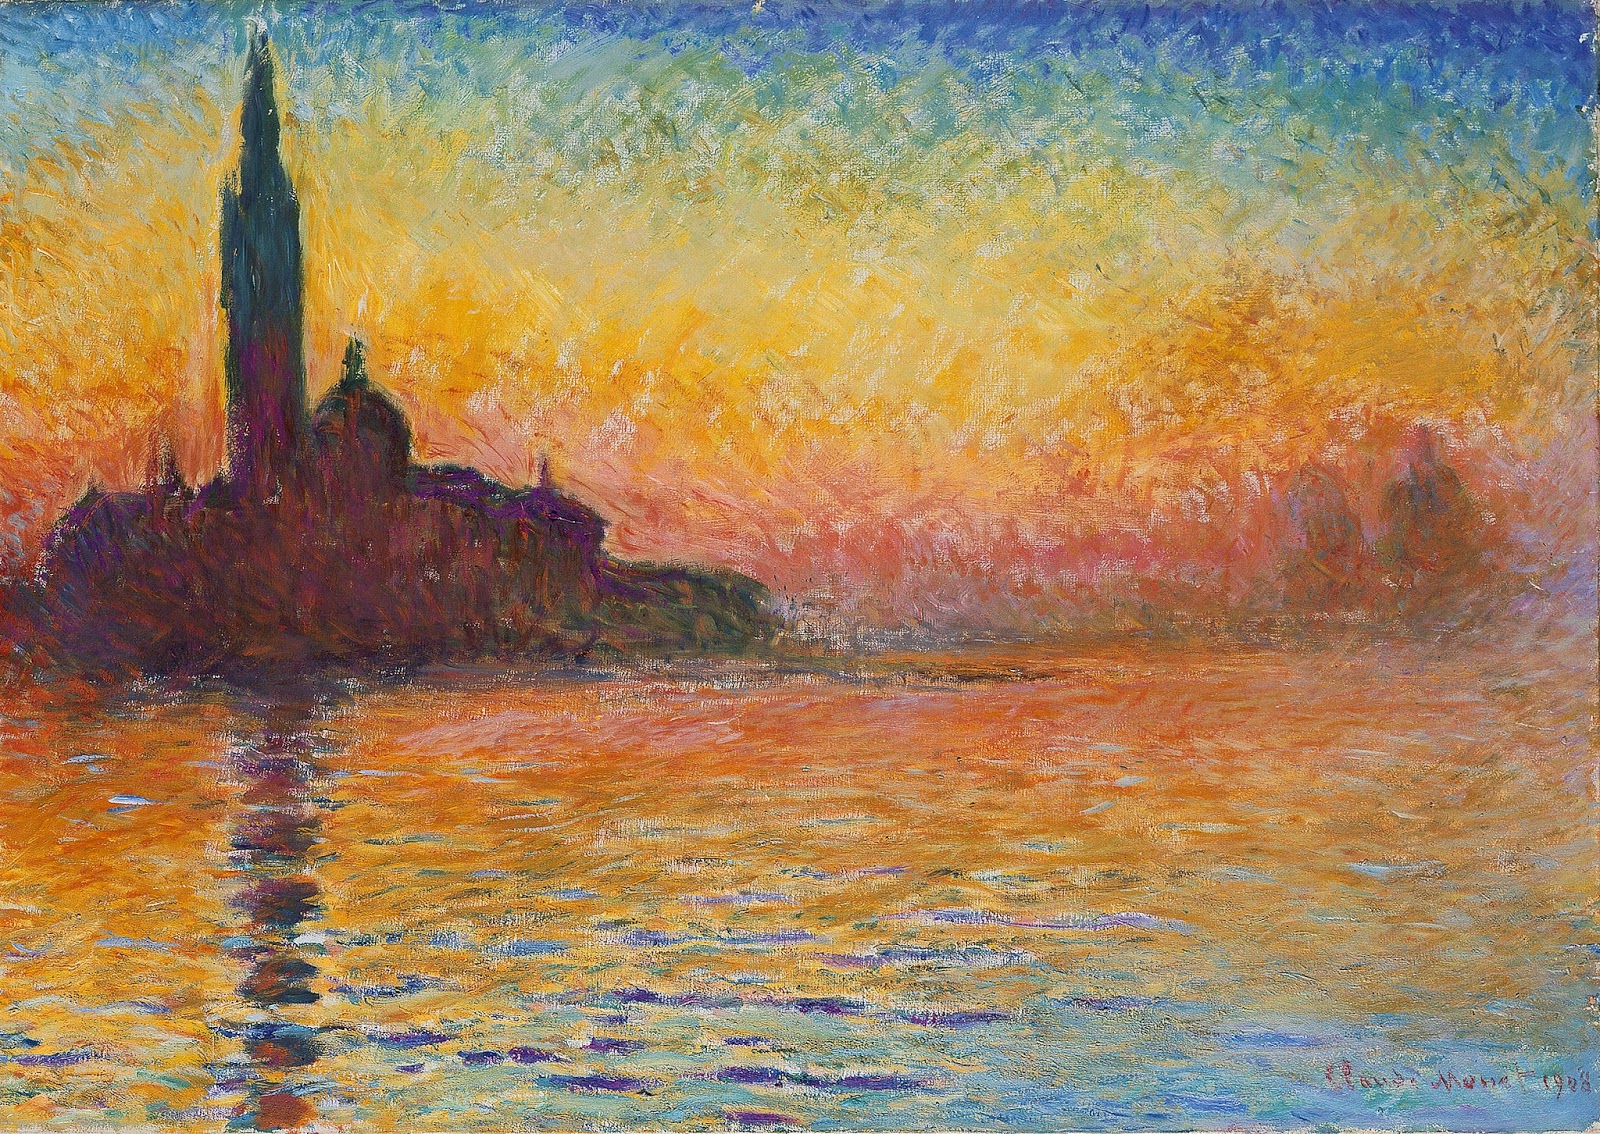 Claude+Monet-1840-1926 (940).jpg